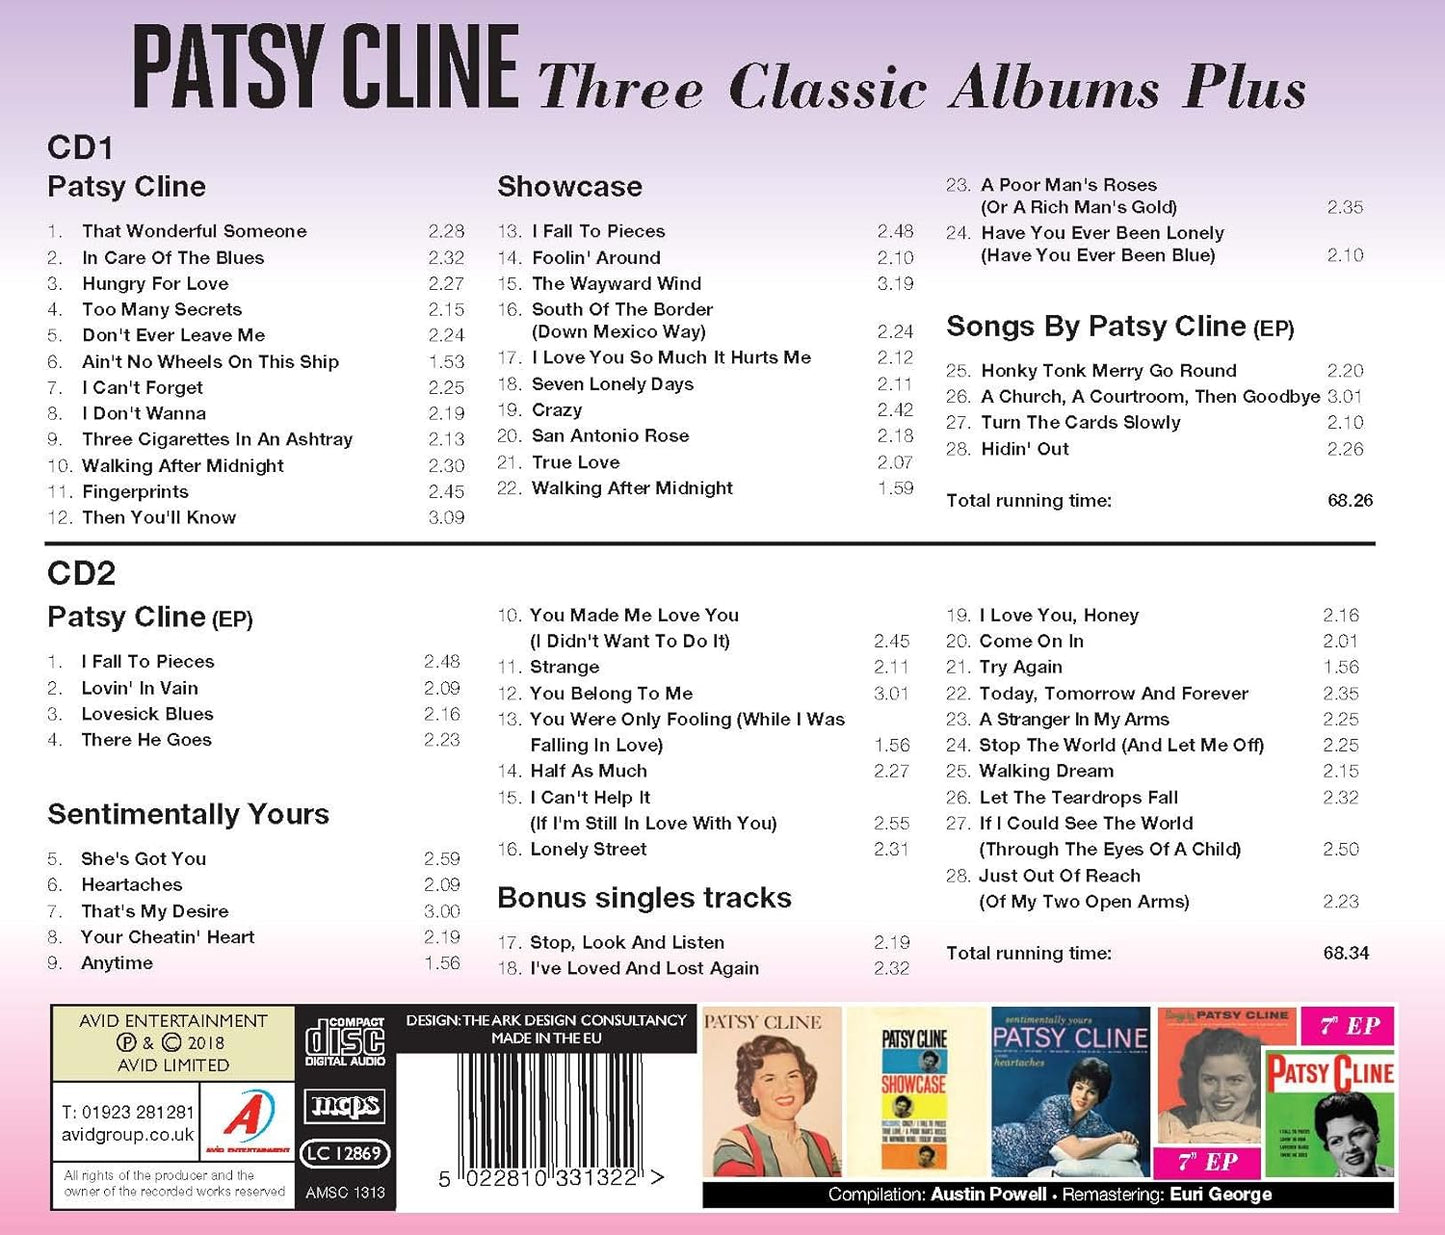 PATSY CLINE - Three Classic Albums Plus